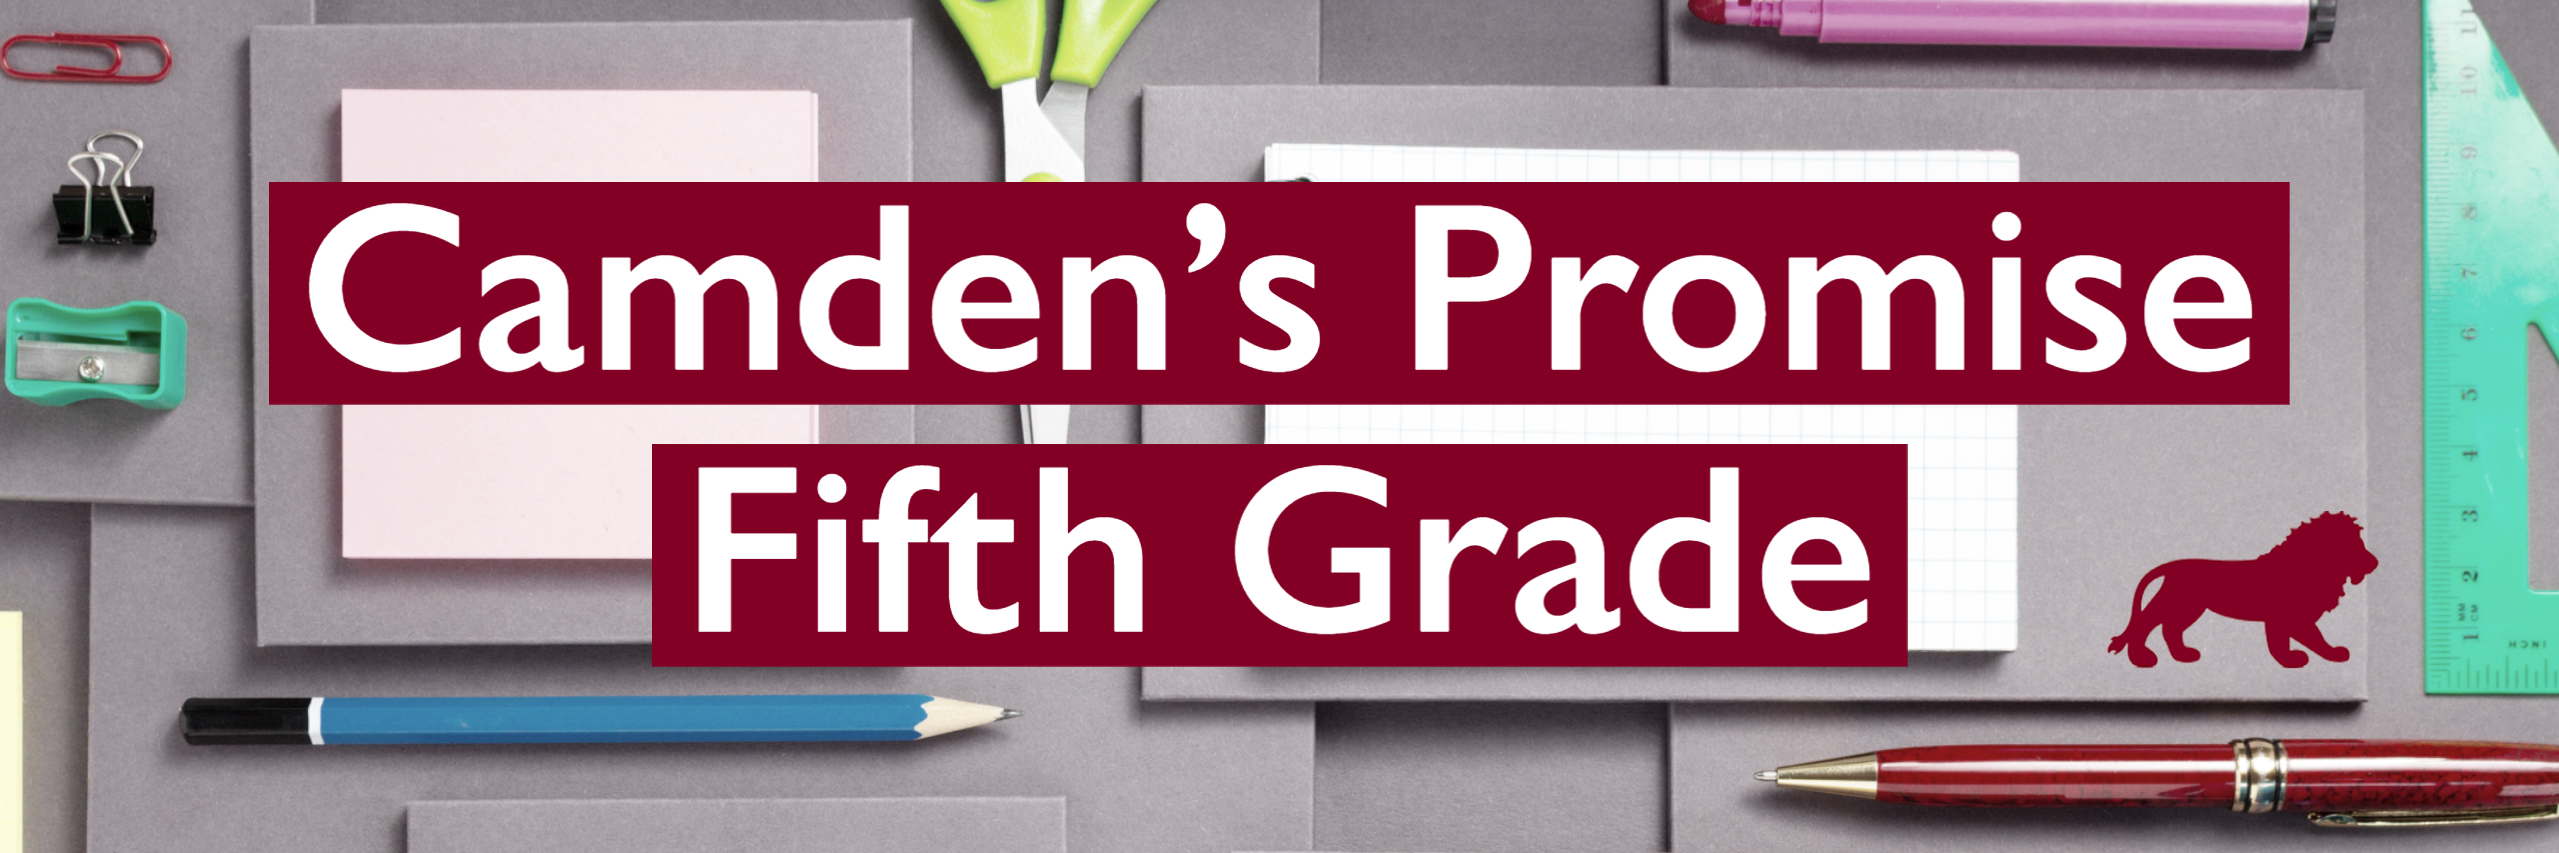 Camden's Promise Fifth Grade